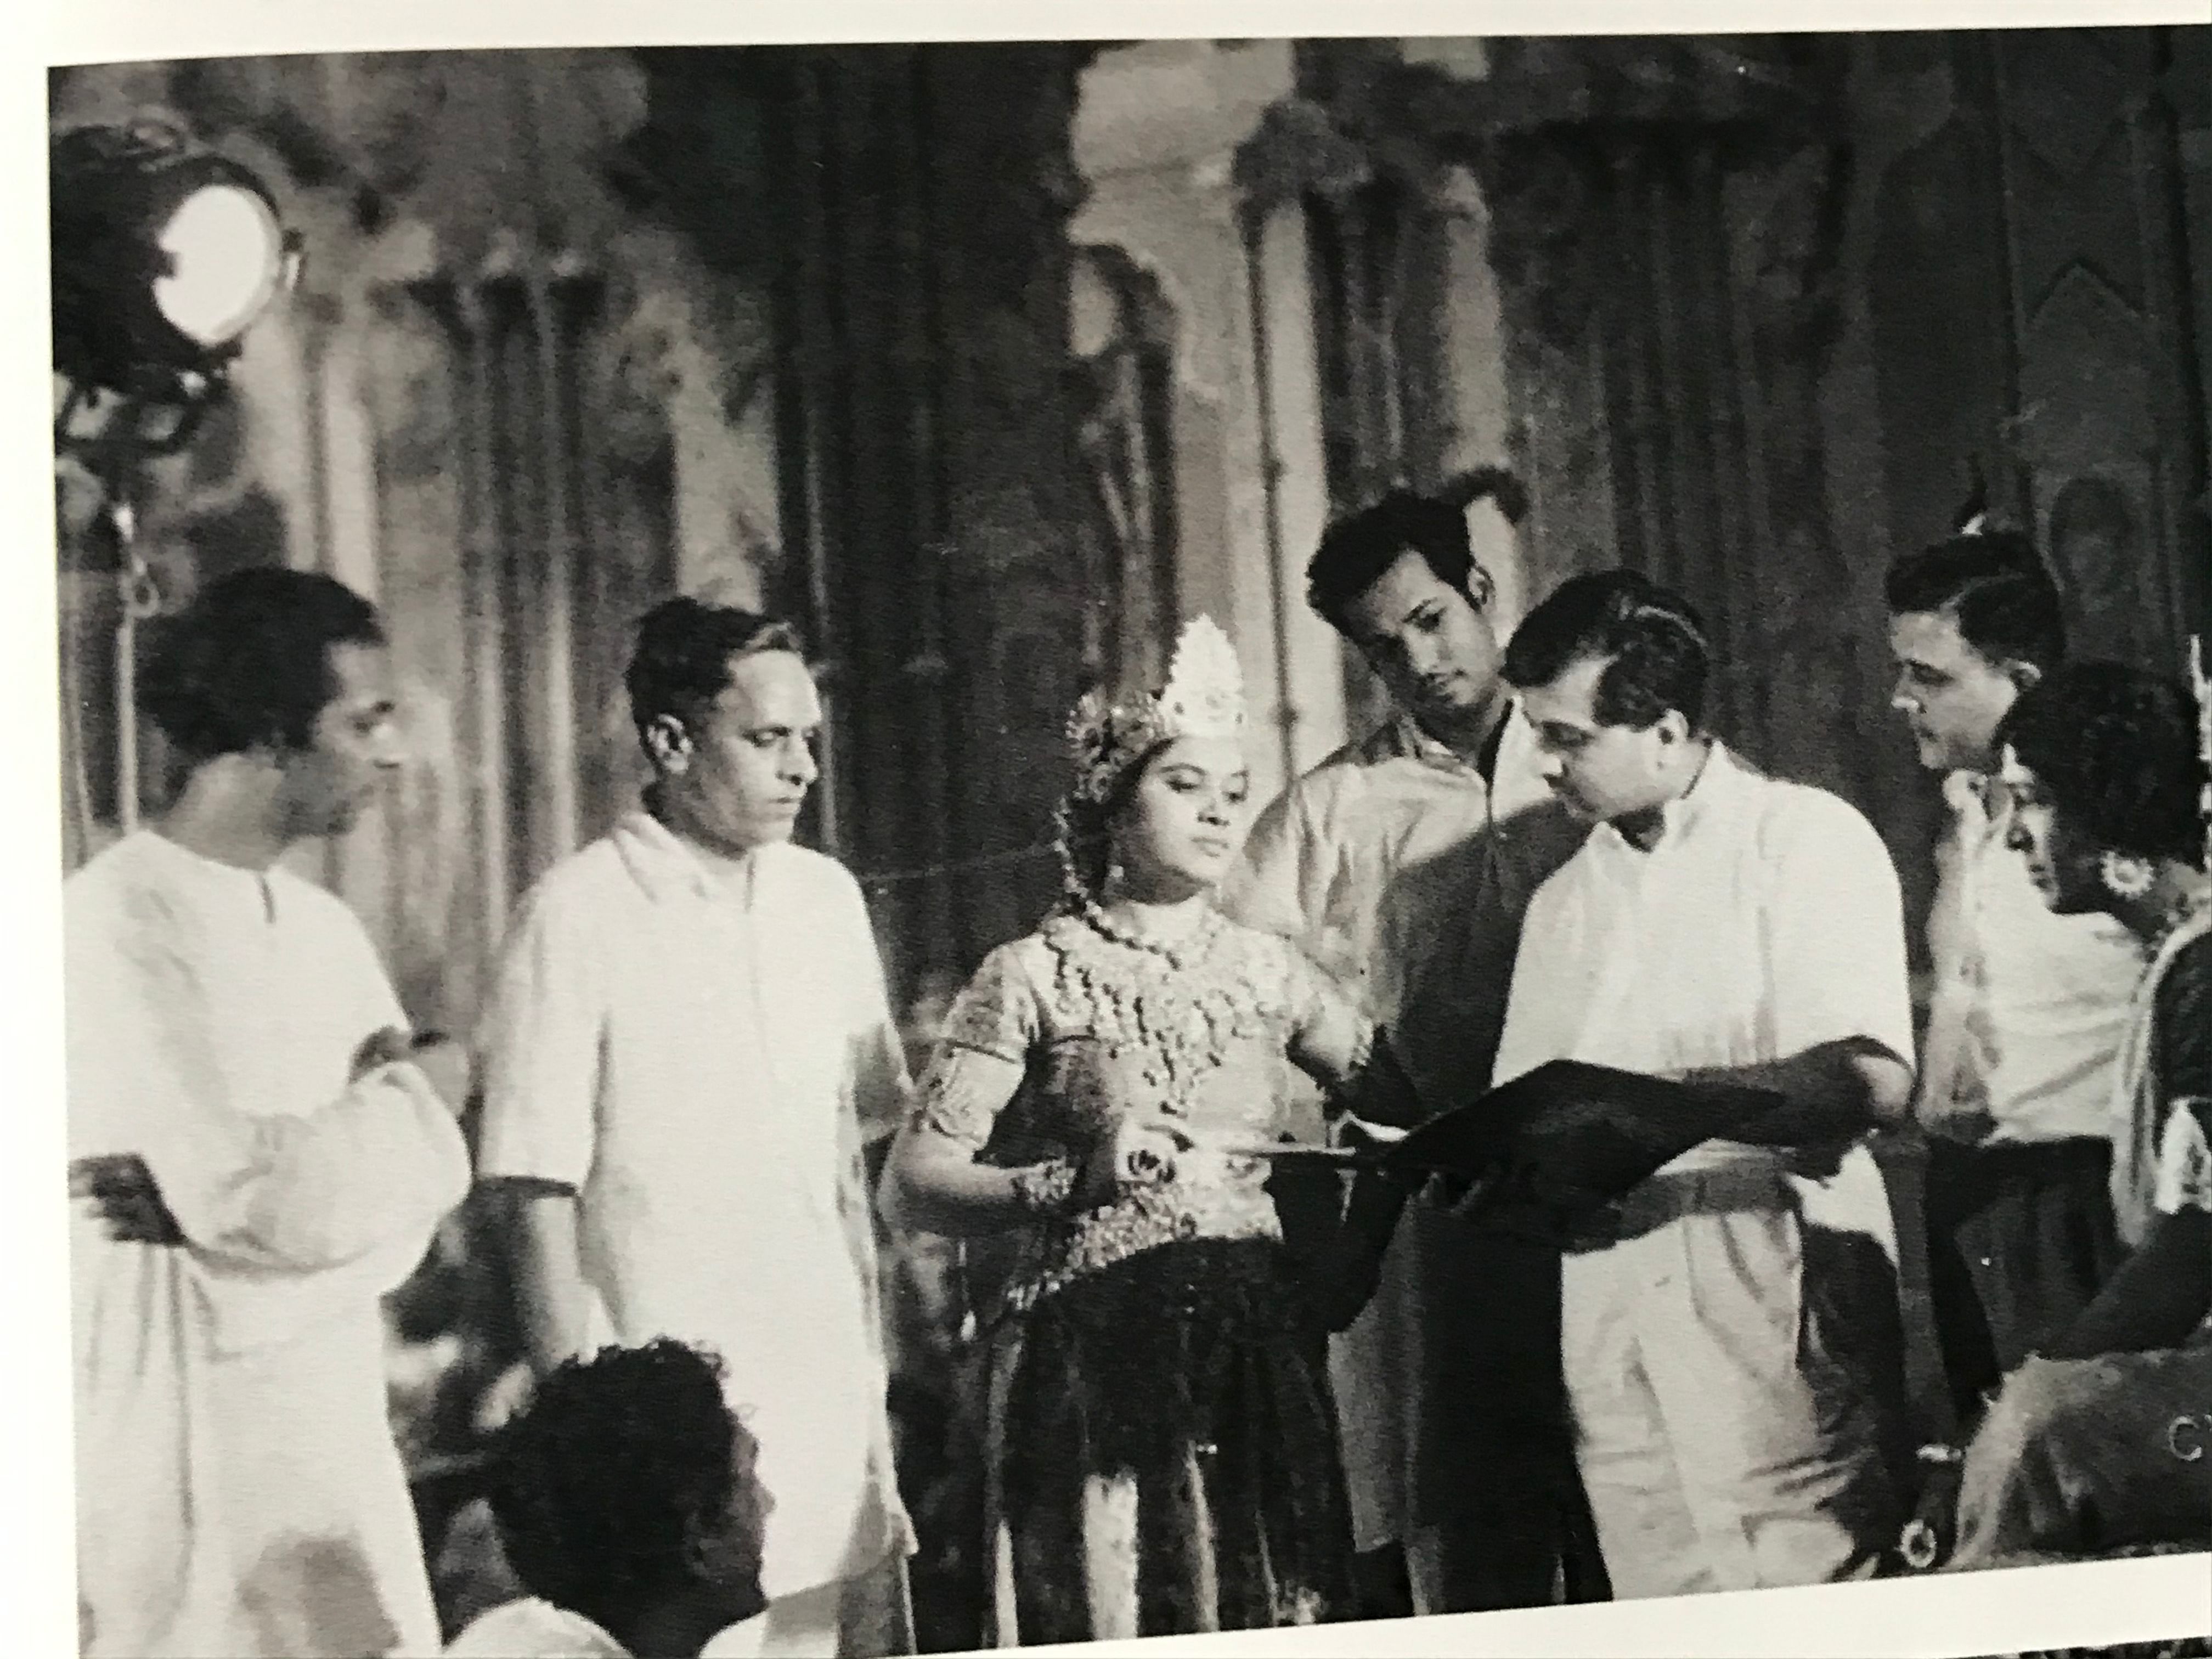 Sarvottam Badami (third from right) on the set of a film.